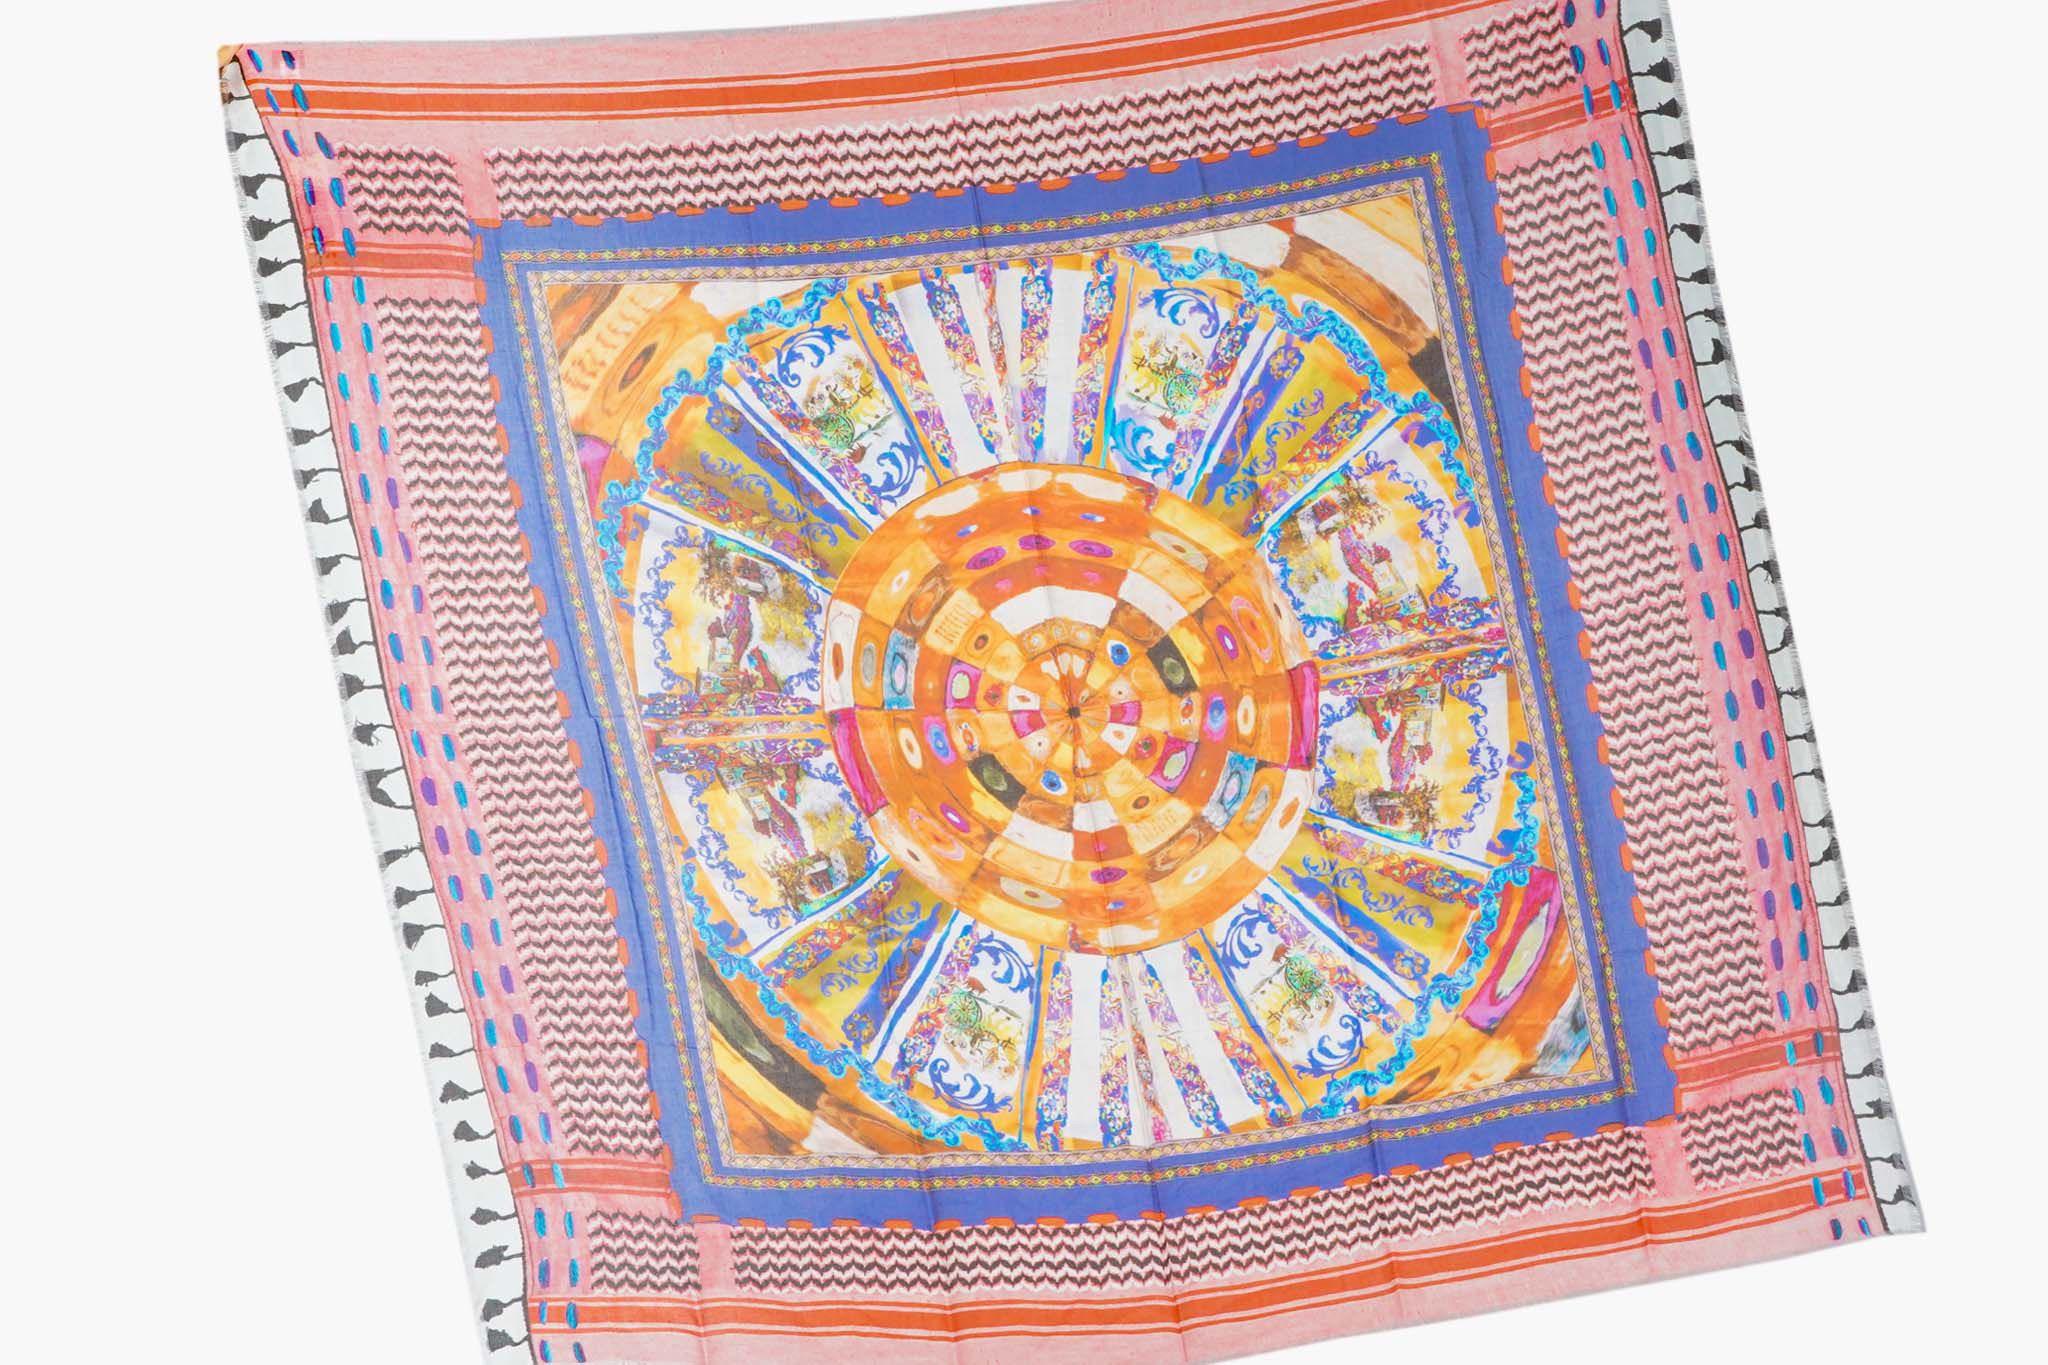 3d print of a keffiyeh with kaleidoscope foulard